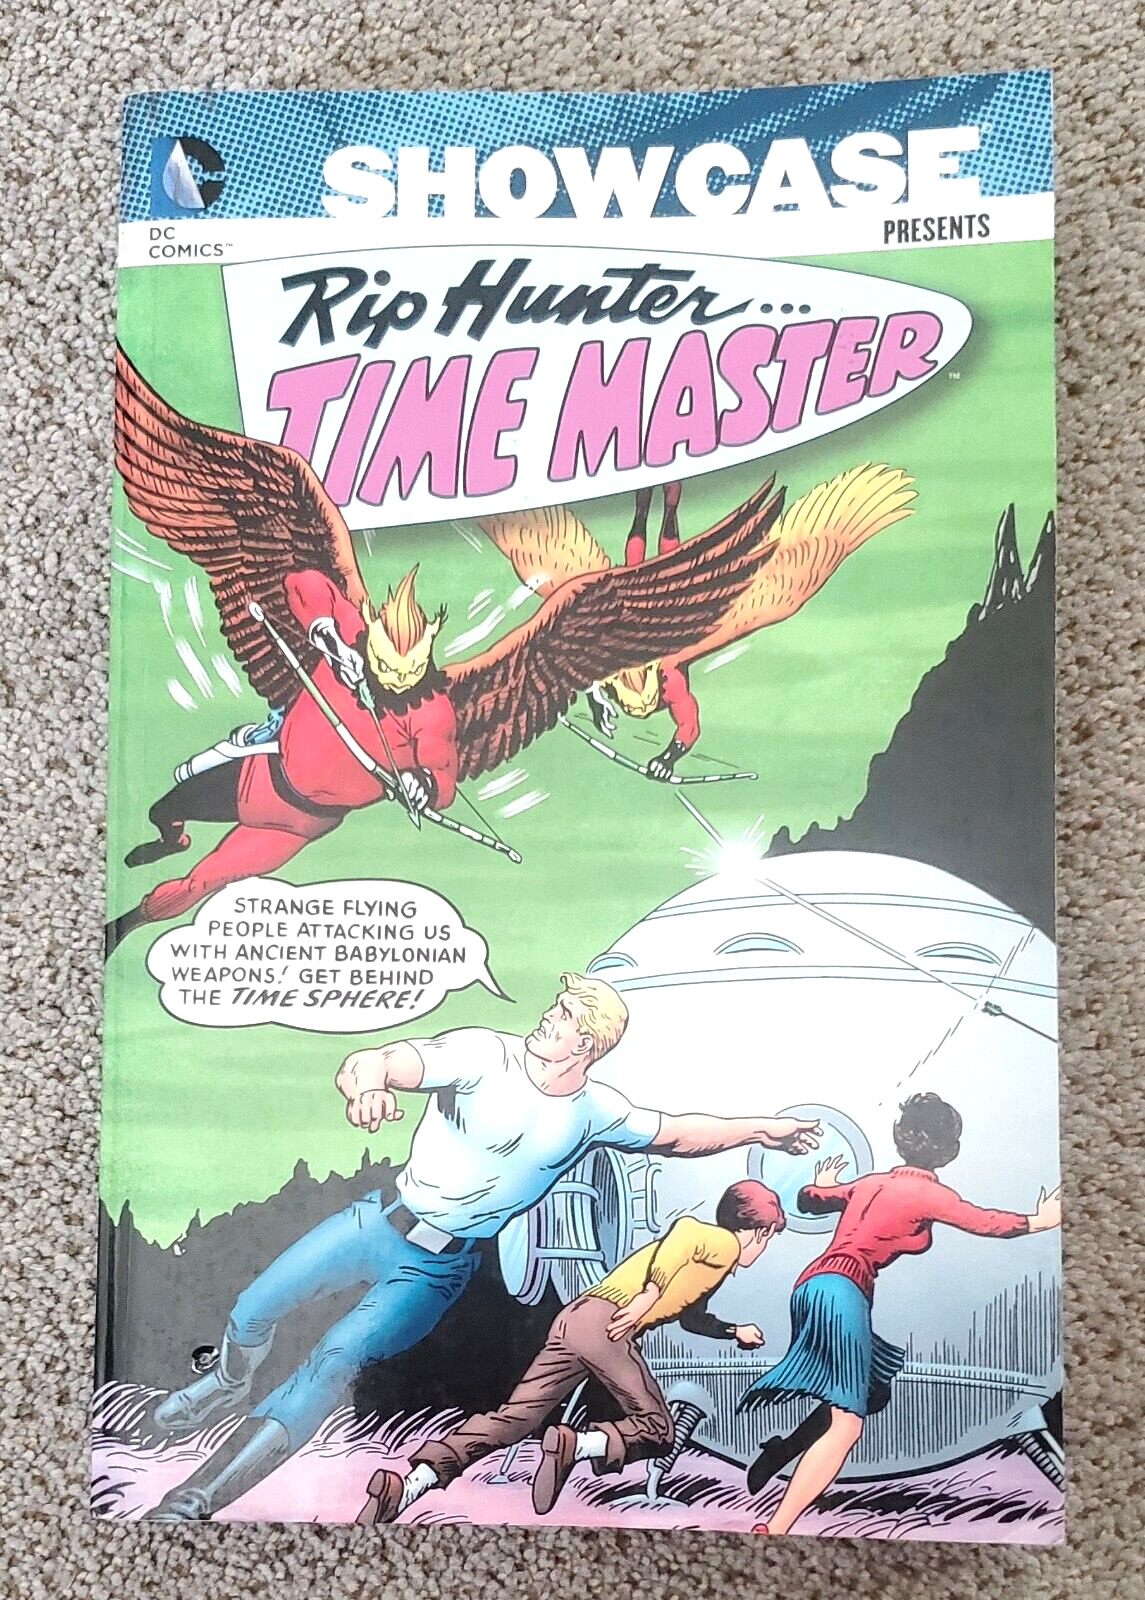 DC COMICS - SHOWCASE PRESENTS RIP HUNTER...TIME MASTER VOL. 1 - TRADE PAPERBACK